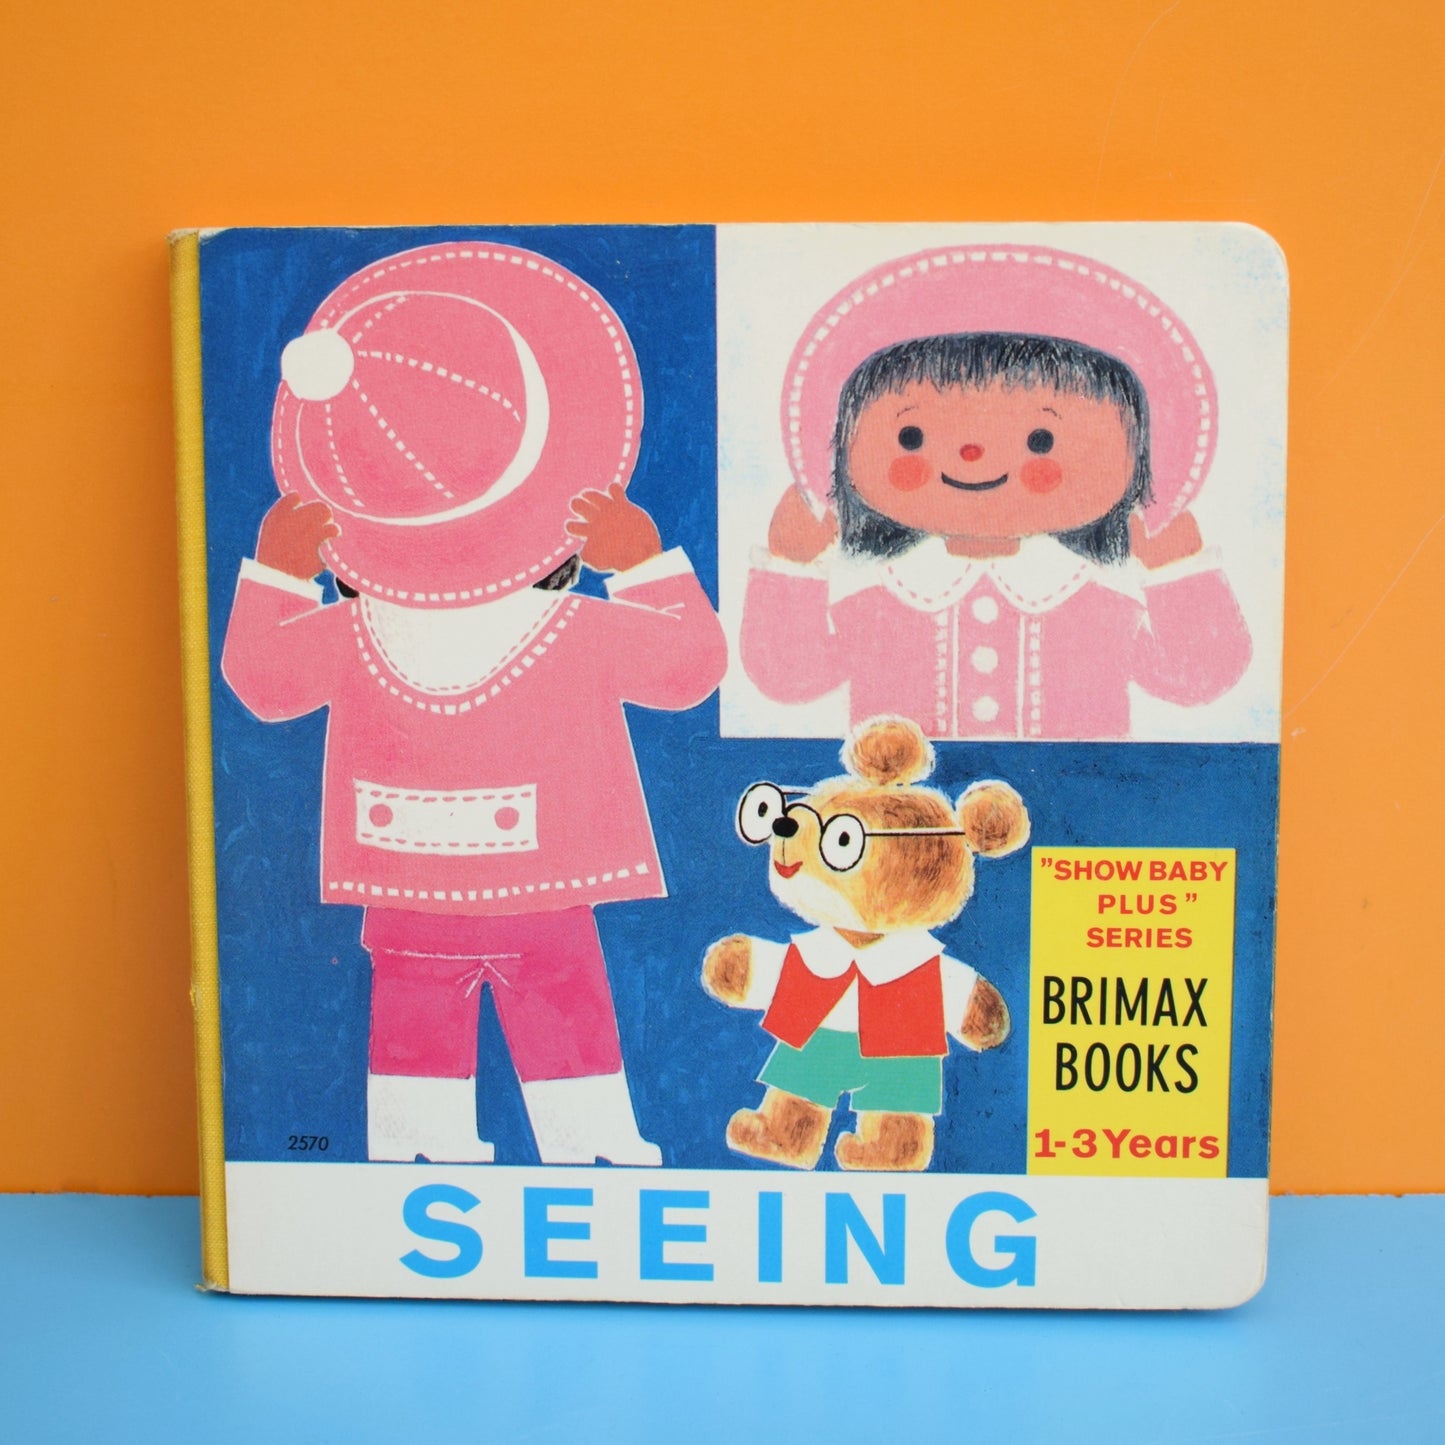 Vintage 1970s Baby Books - Mealtime / Seeing - Brimax